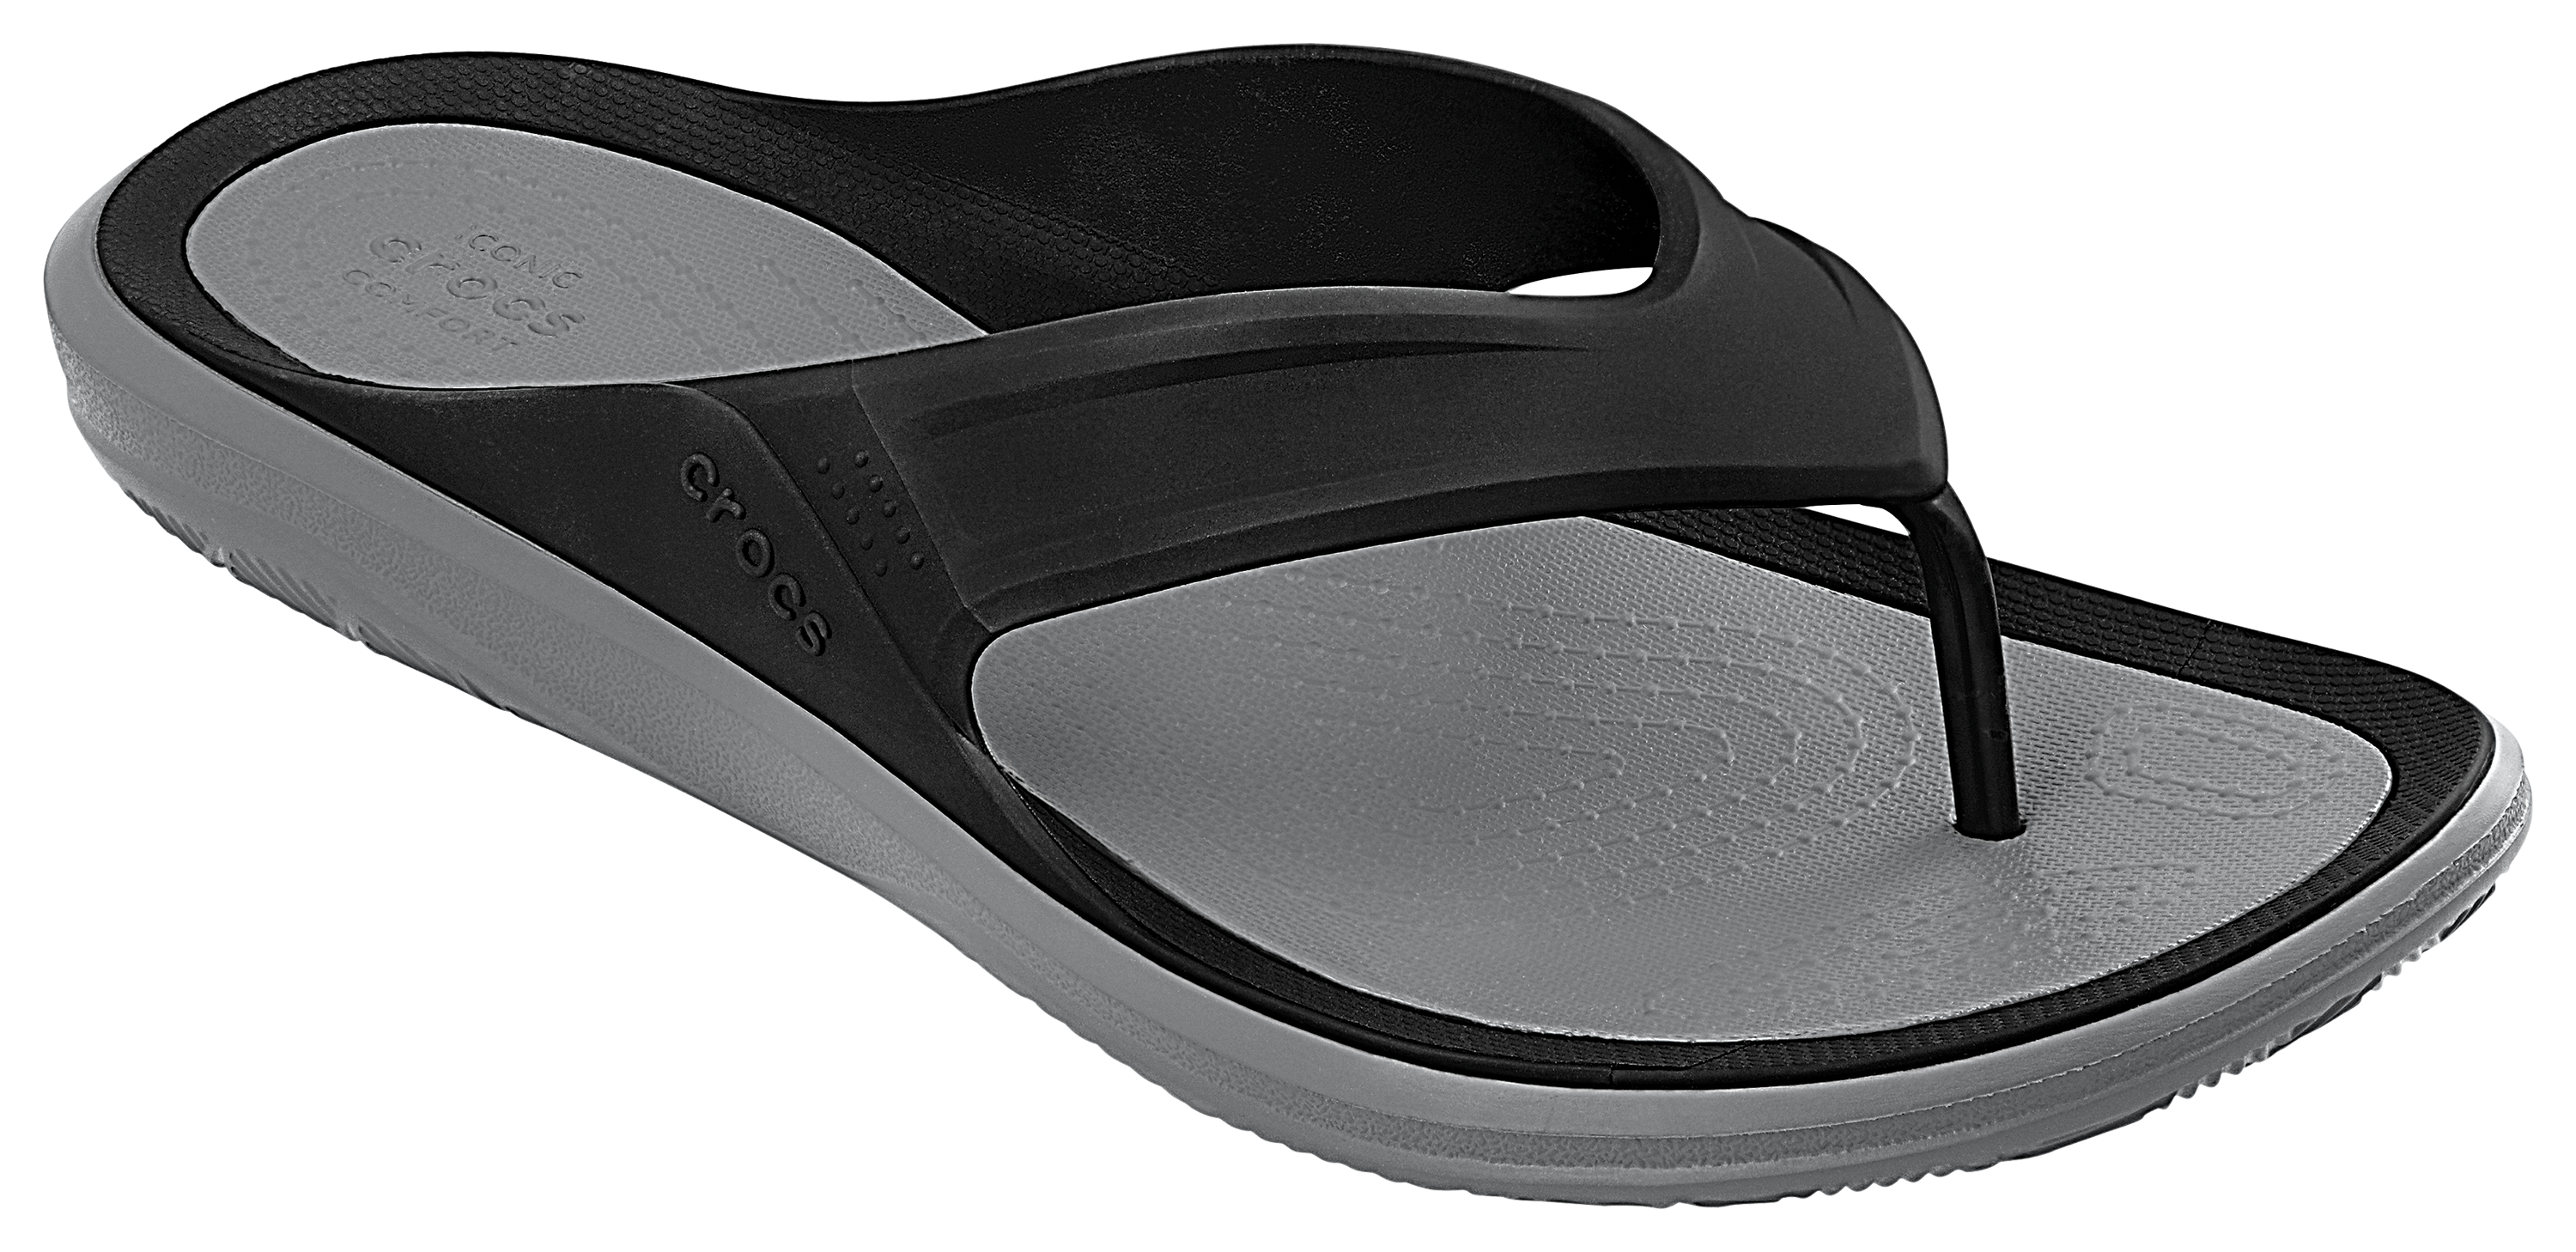 Crocs Swiftwater Wave Flip Thong Sandals for Men - Black/Gray - 10M